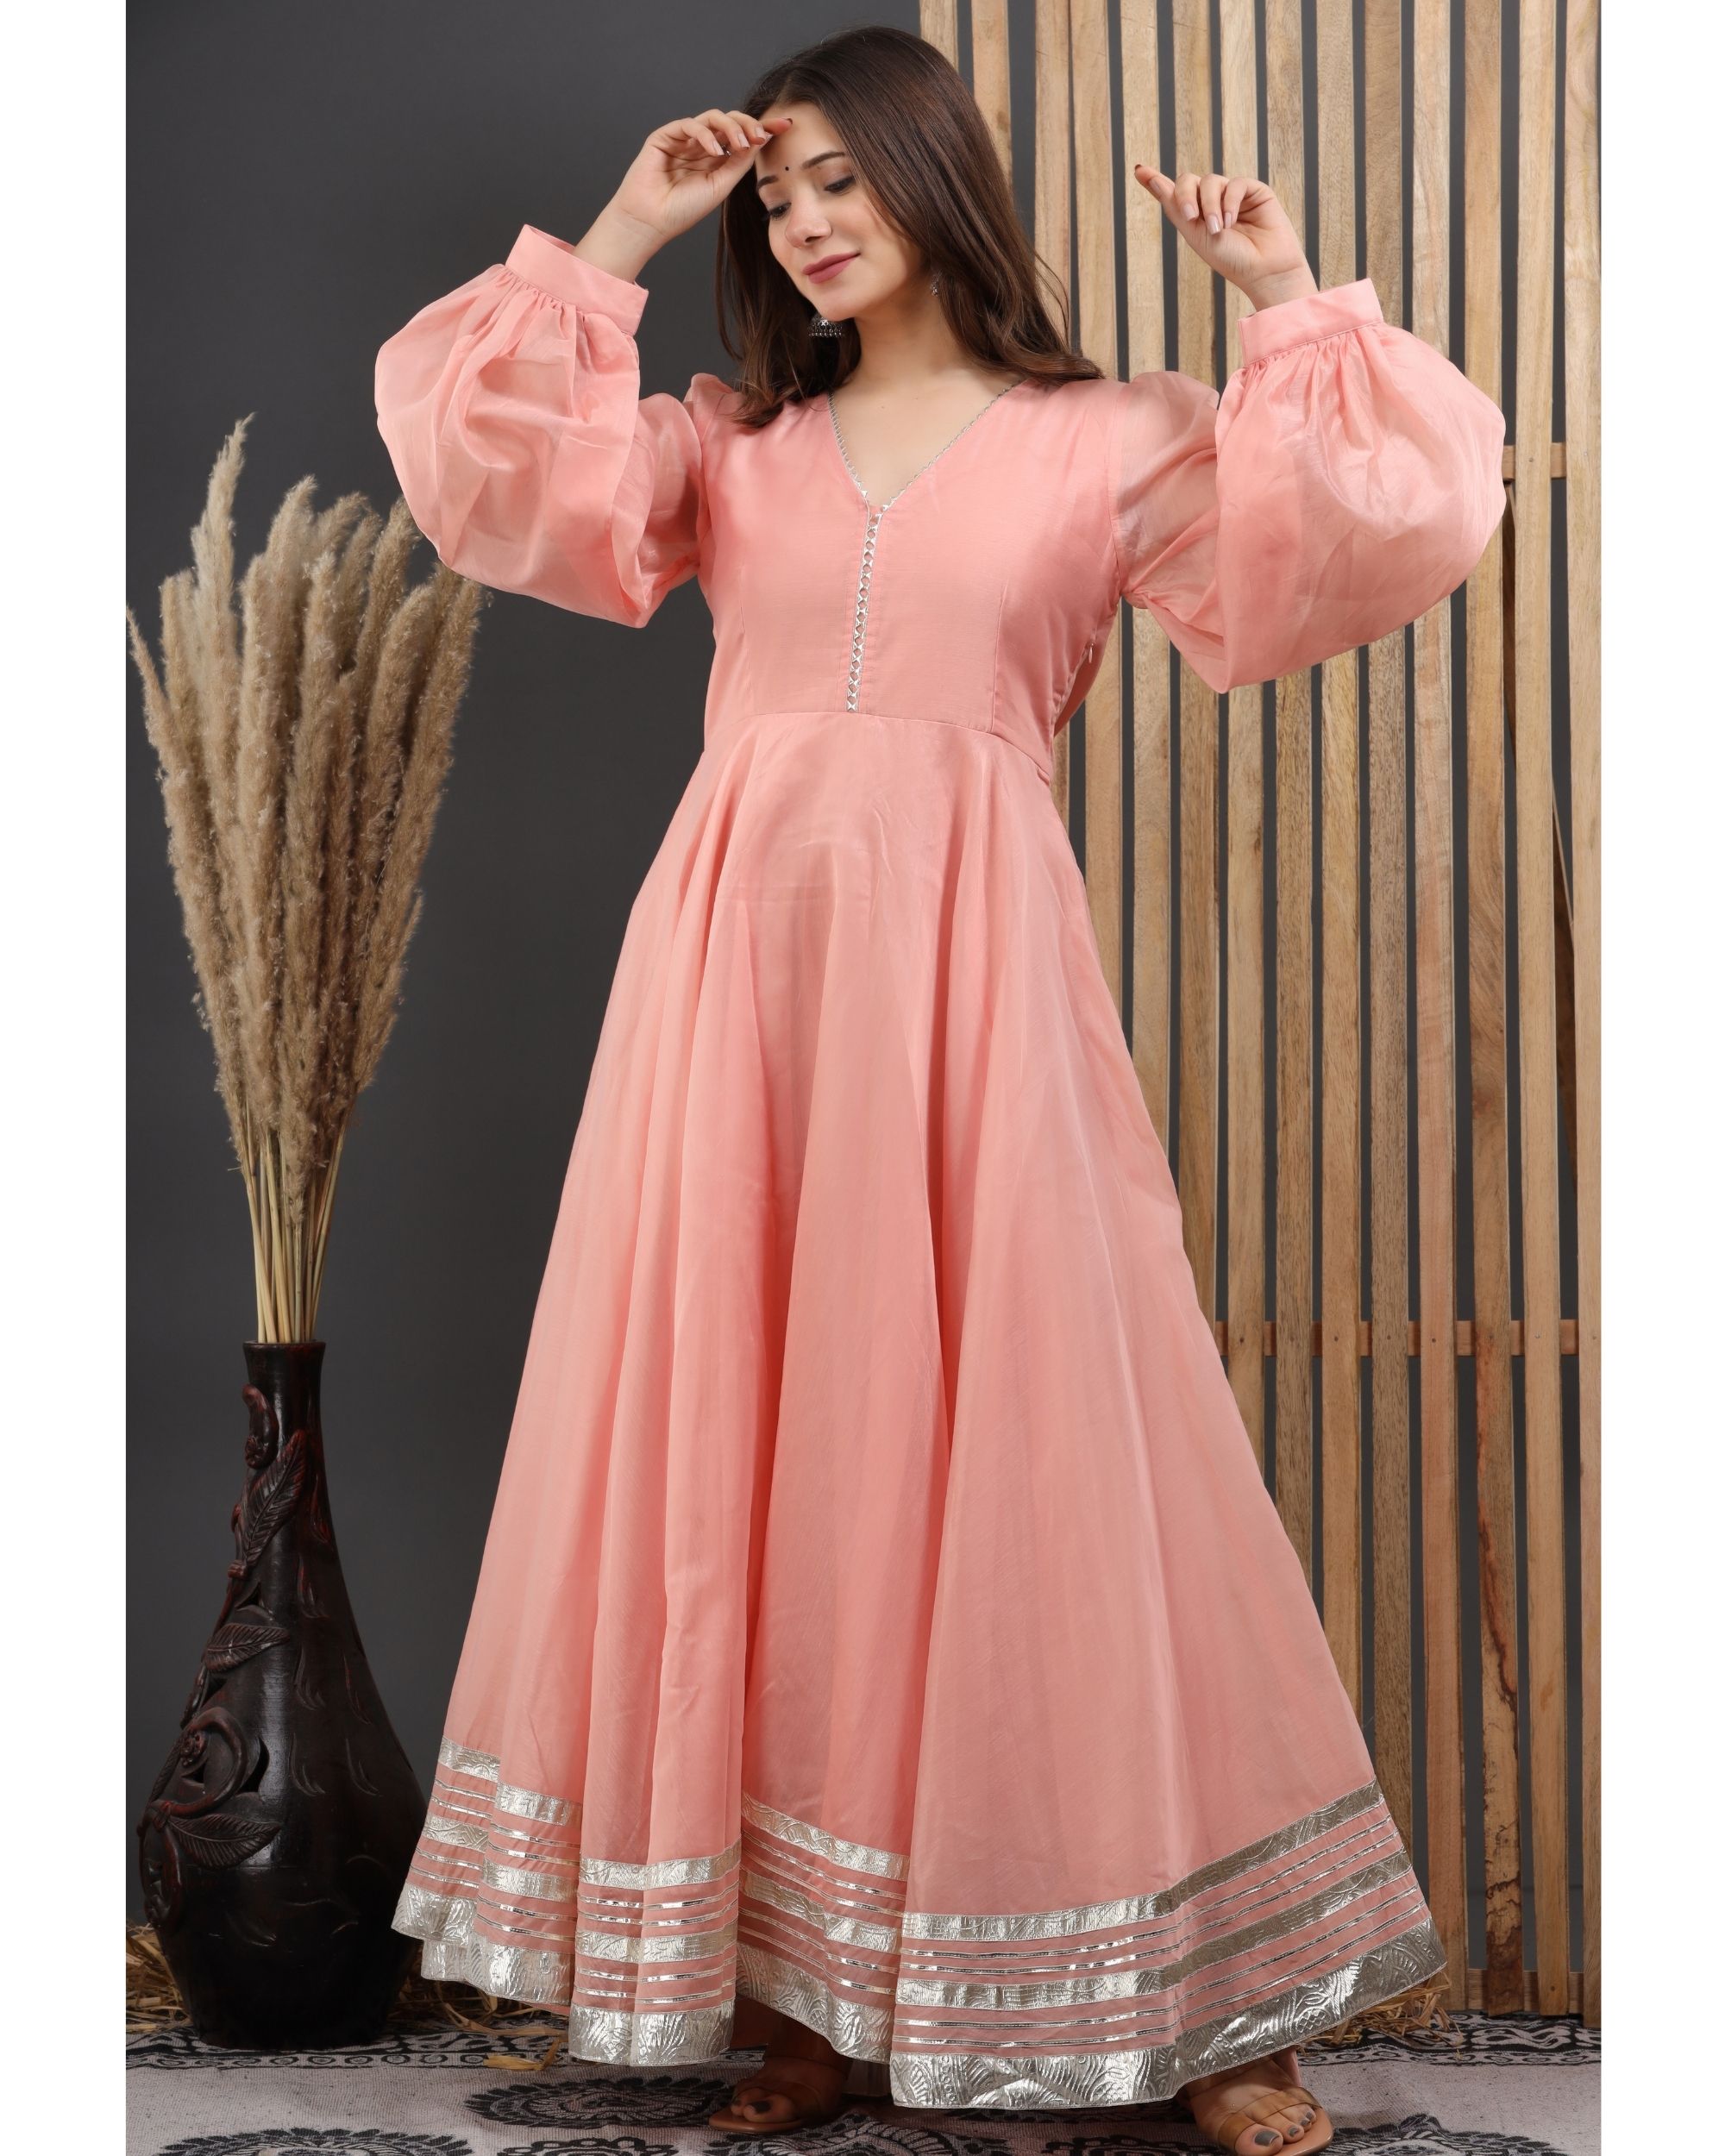 Buy Light Pink Embroidery Wedding Anarkali Suit In USA, UK, Canada,  Australia, Newzeland online